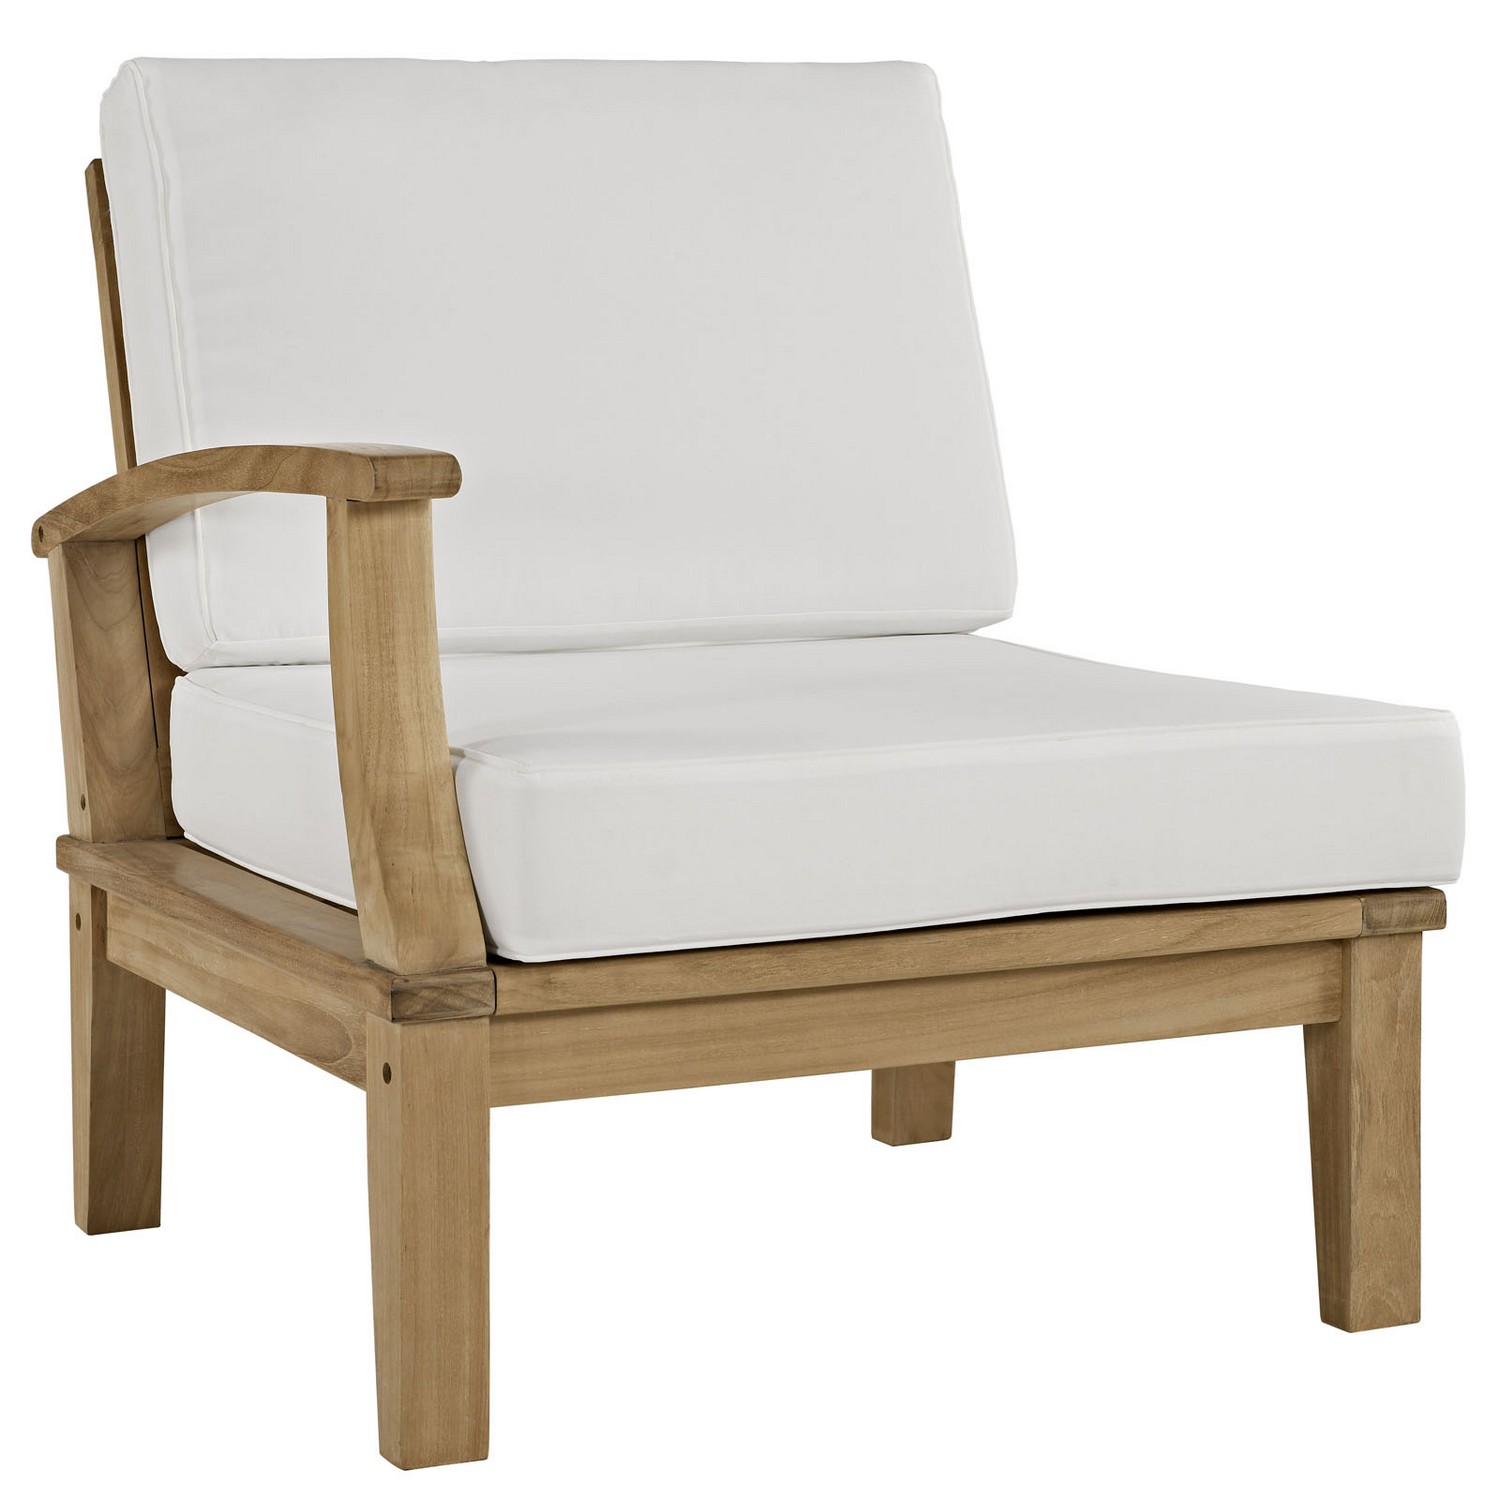 Modway Marina Outdoor Patio Teak Right-Arm Sofa - Natural White